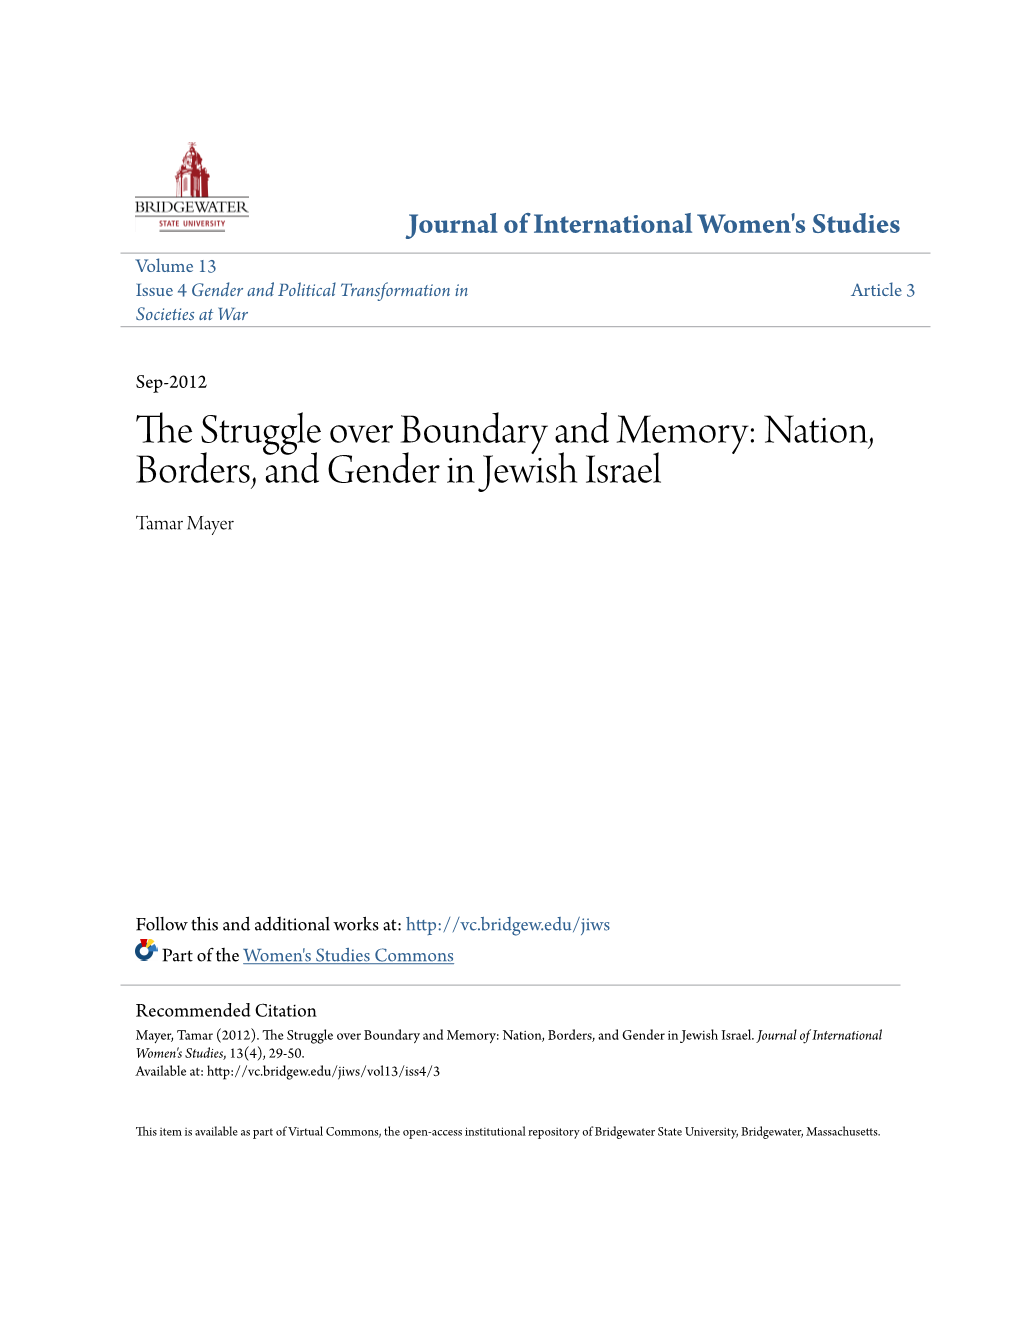 Nation, Borders, and Gender in Jewish Israel Tamar Mayer